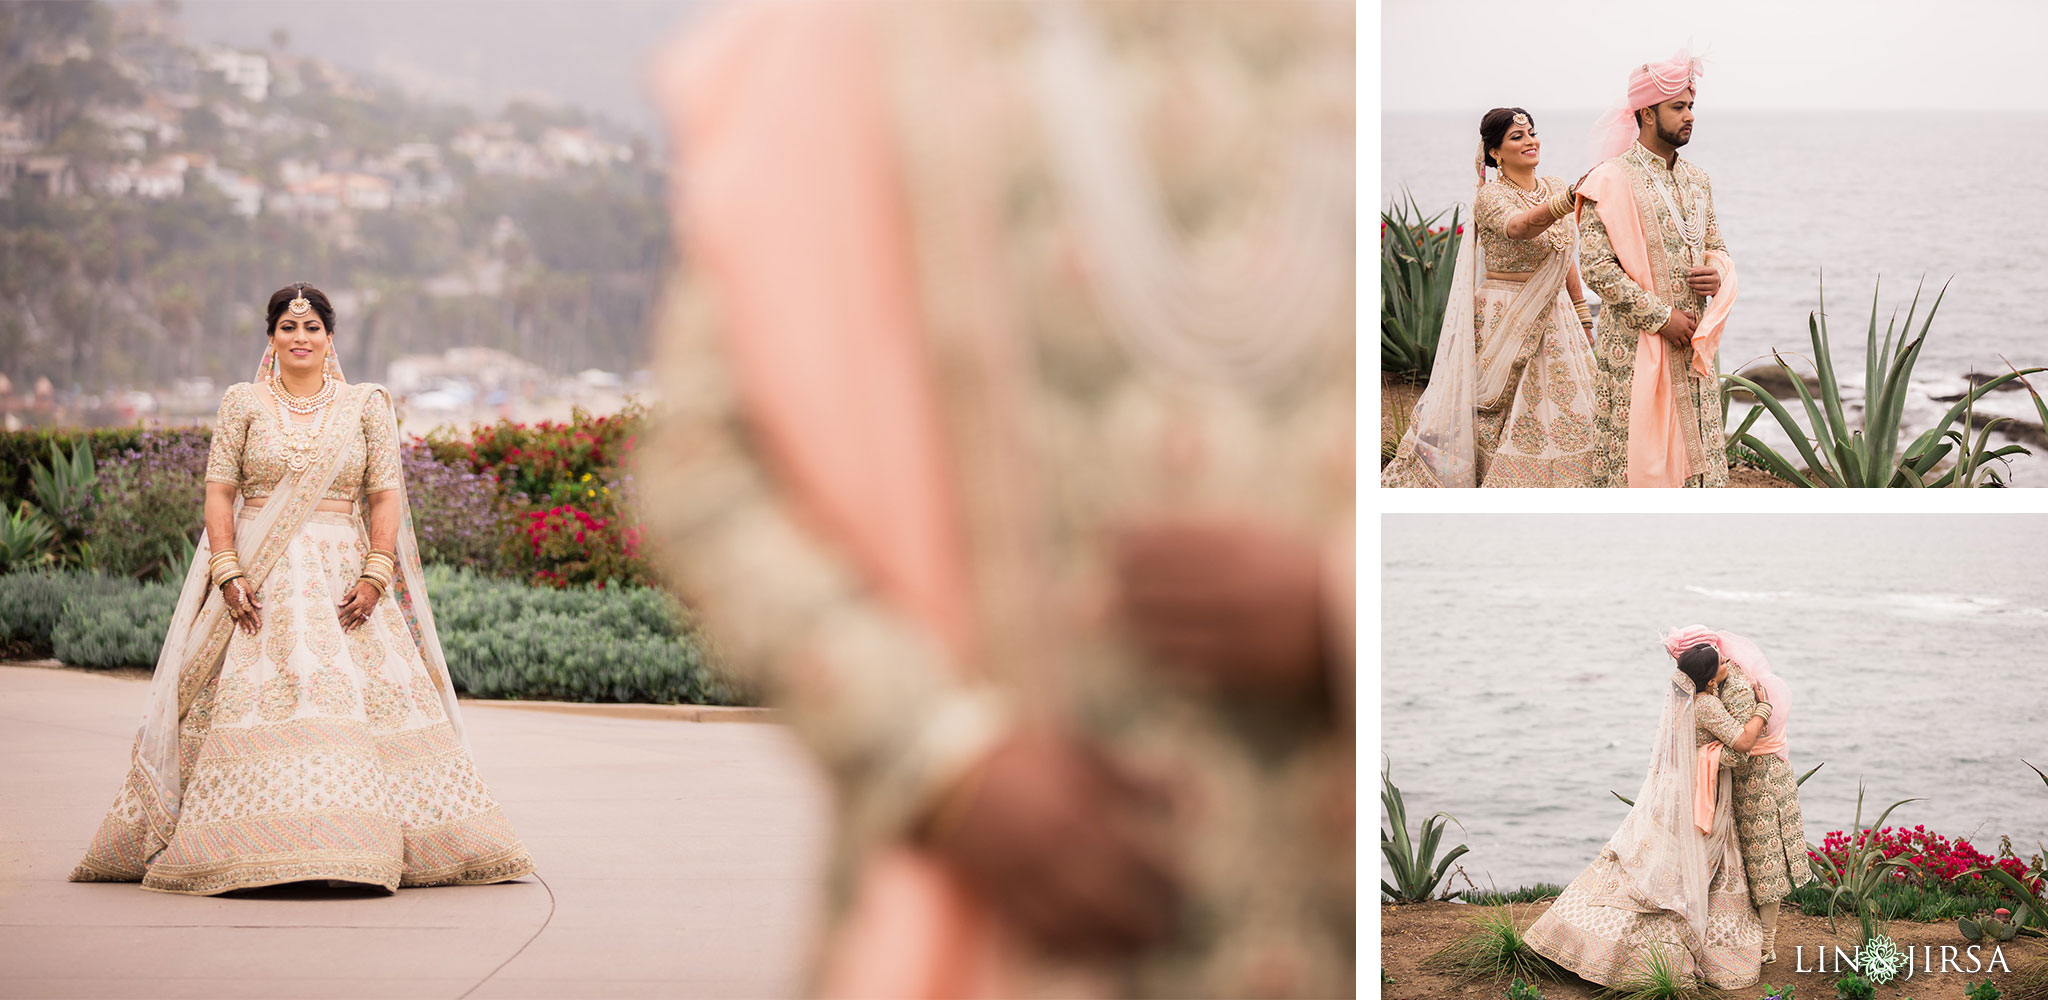 017 montage laguna beach indian couple wedding photography